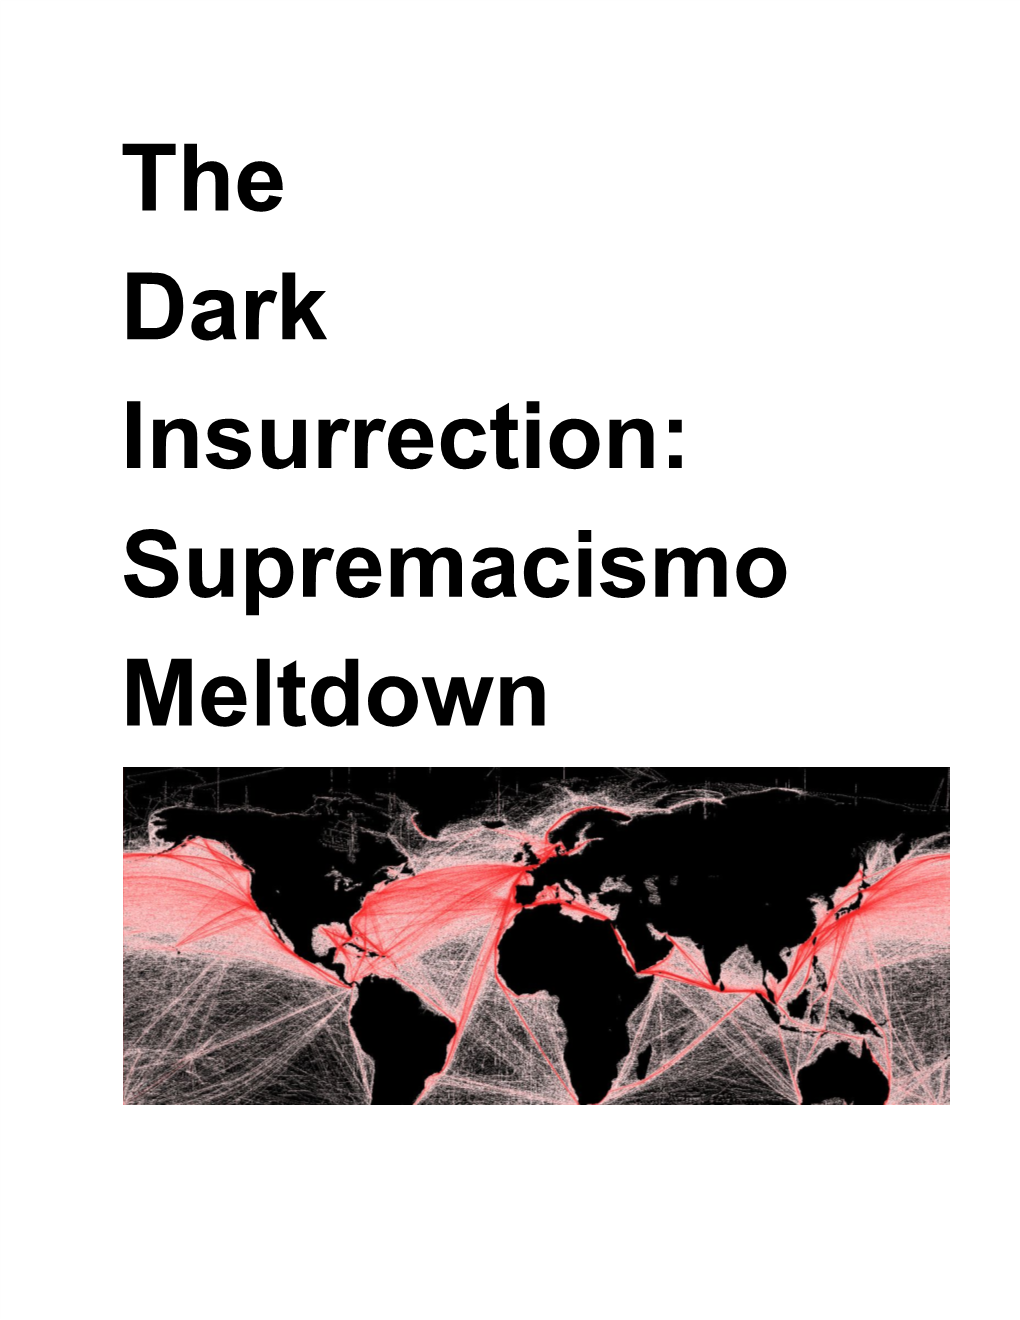 The Dark Insurrection: Supremacismo Meltdown